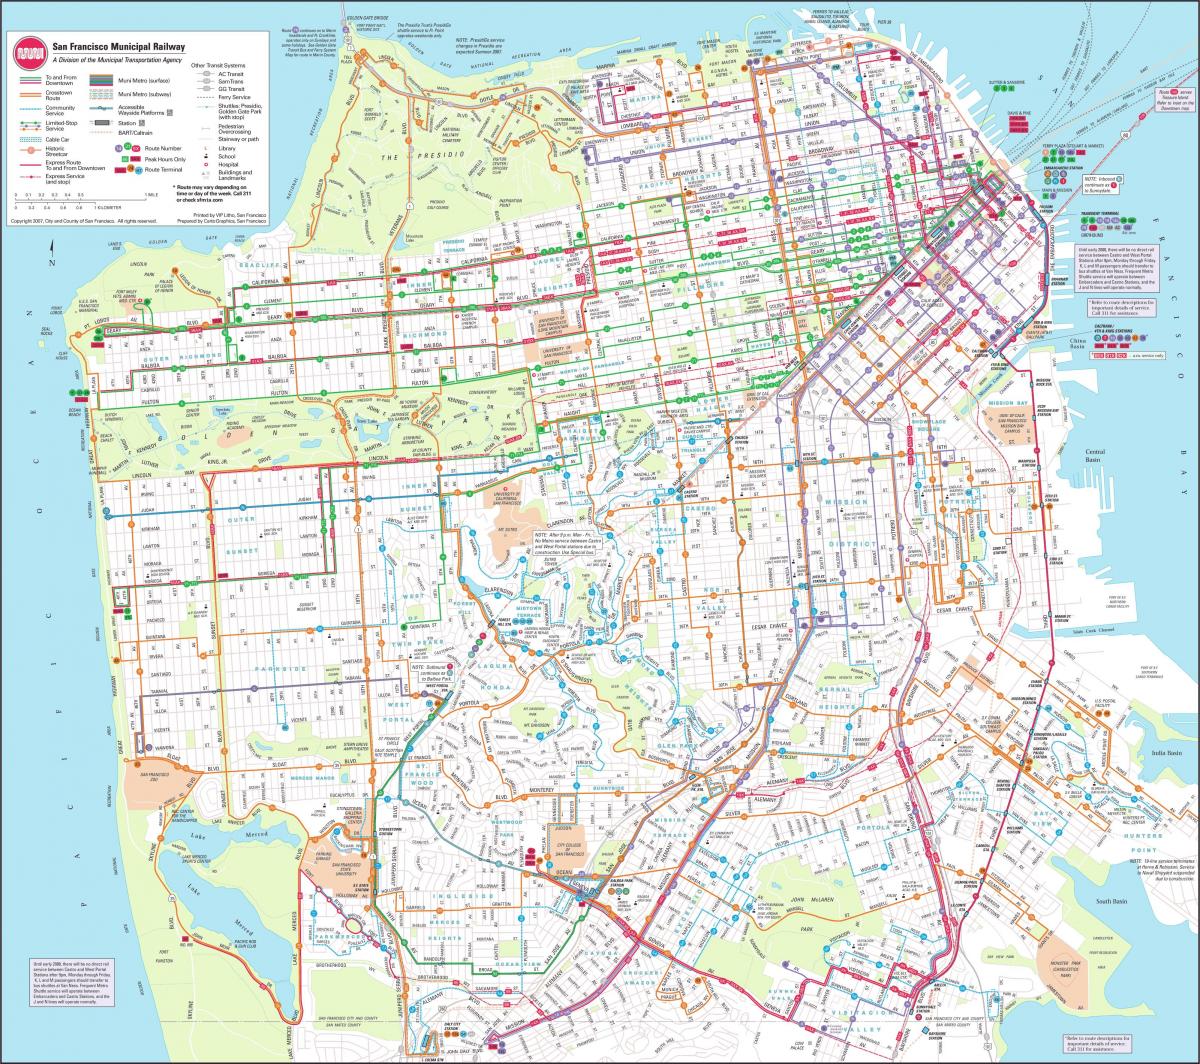 Mapa de San Francisco municipal railway